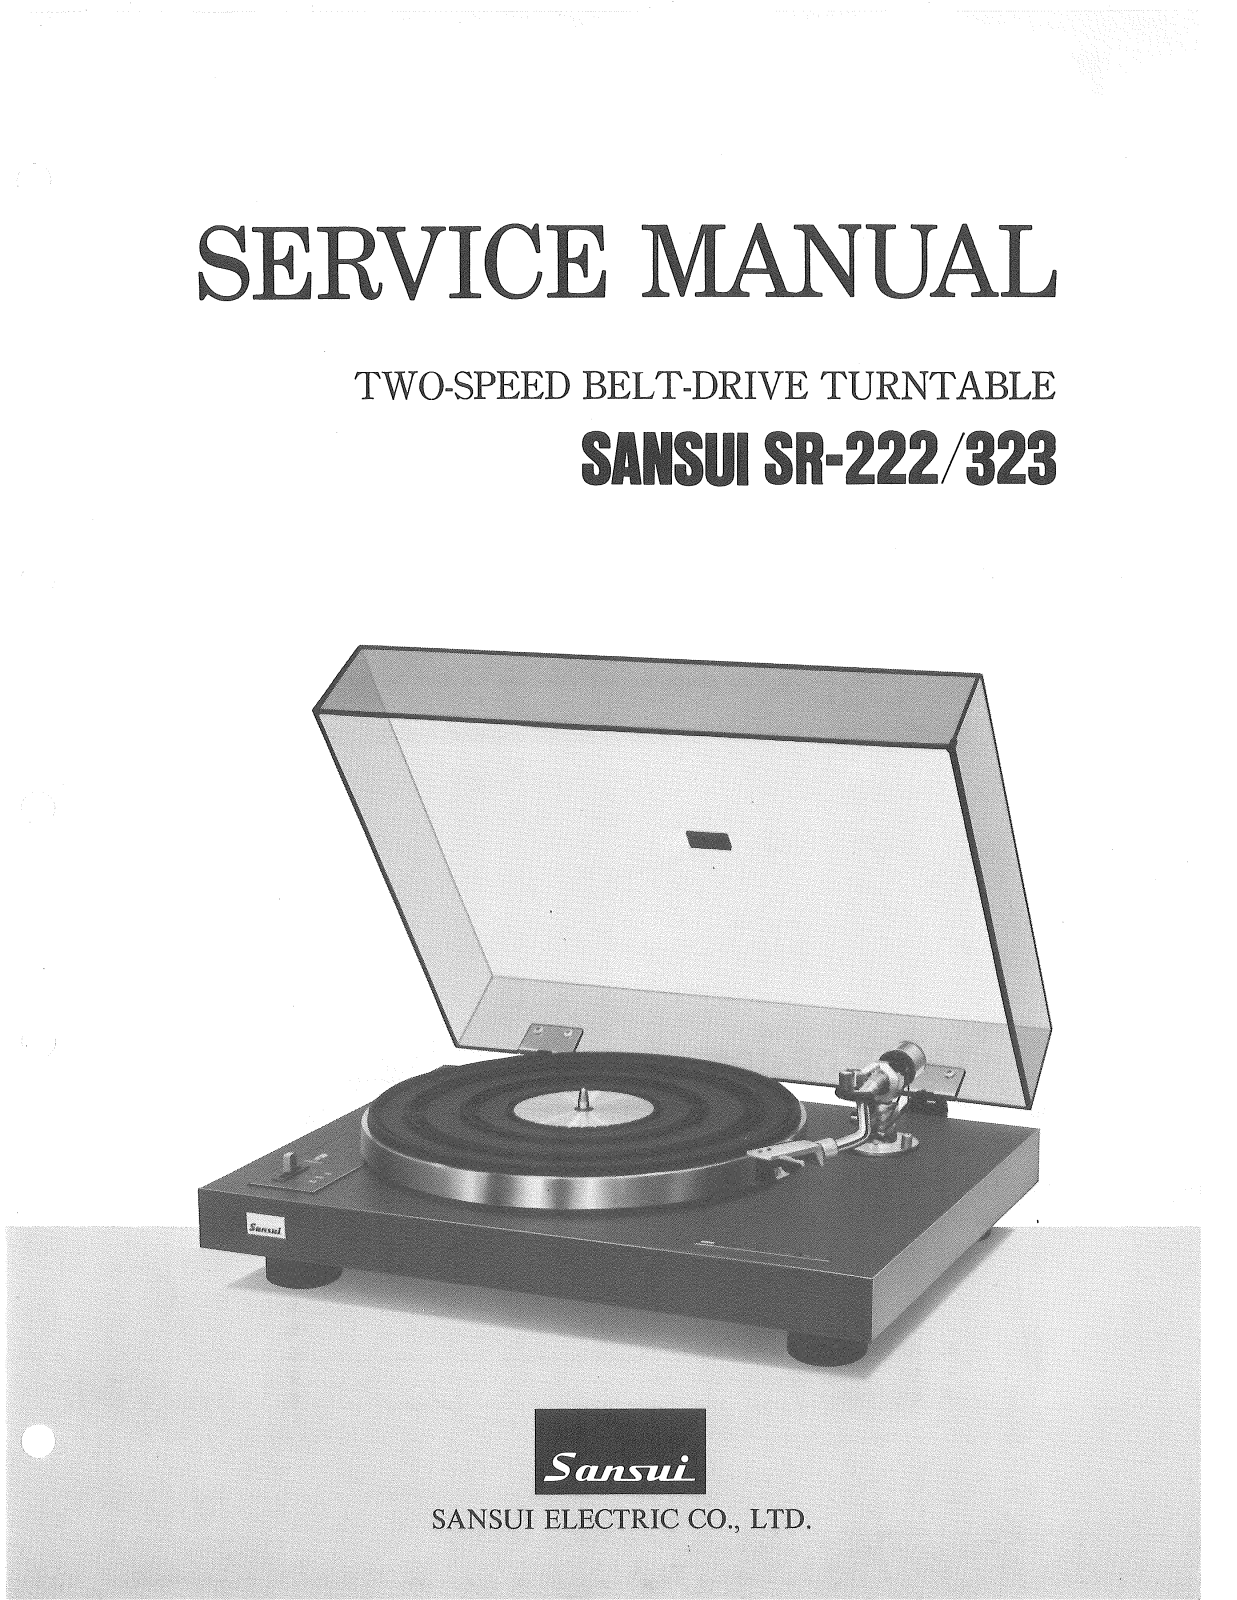 Sansui SR-222, SR-323 Service manual